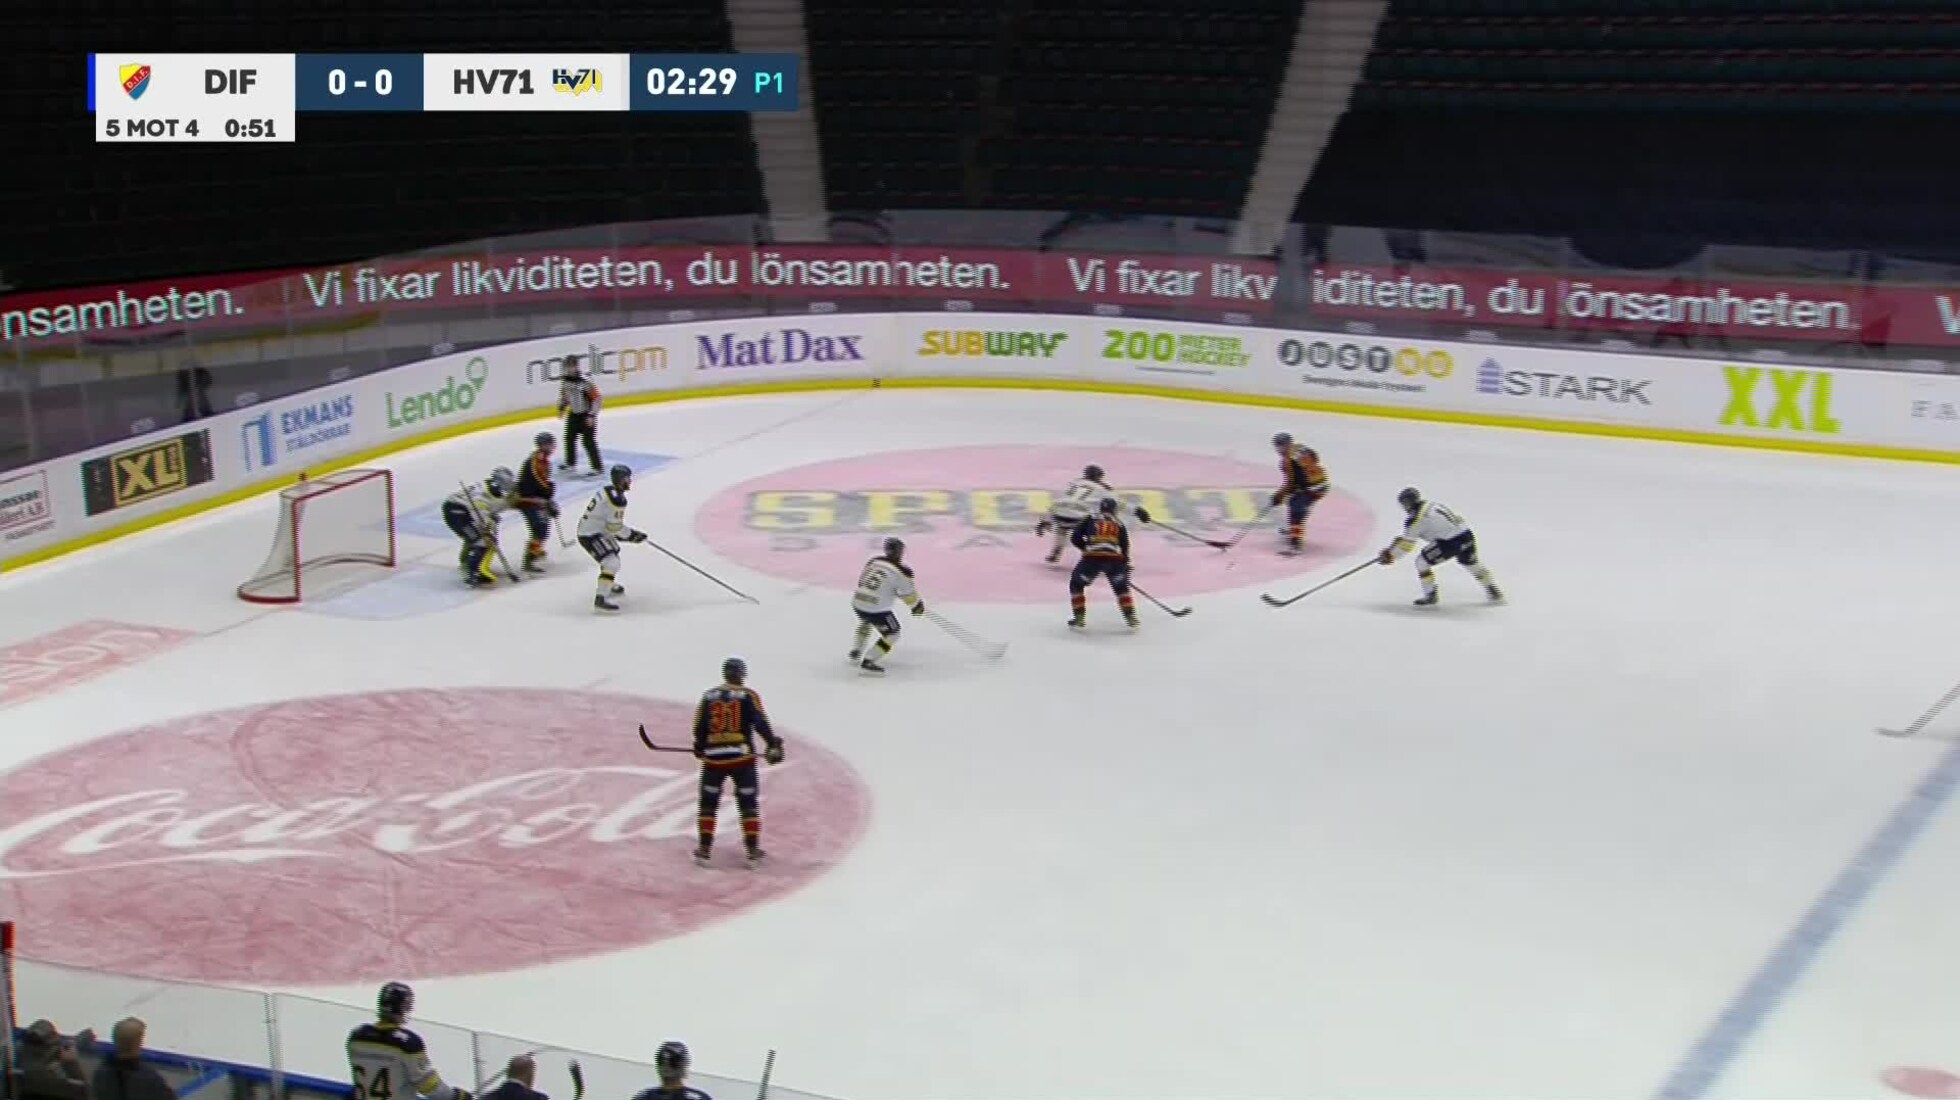 Hv71: Djurgården Hockey - HV71